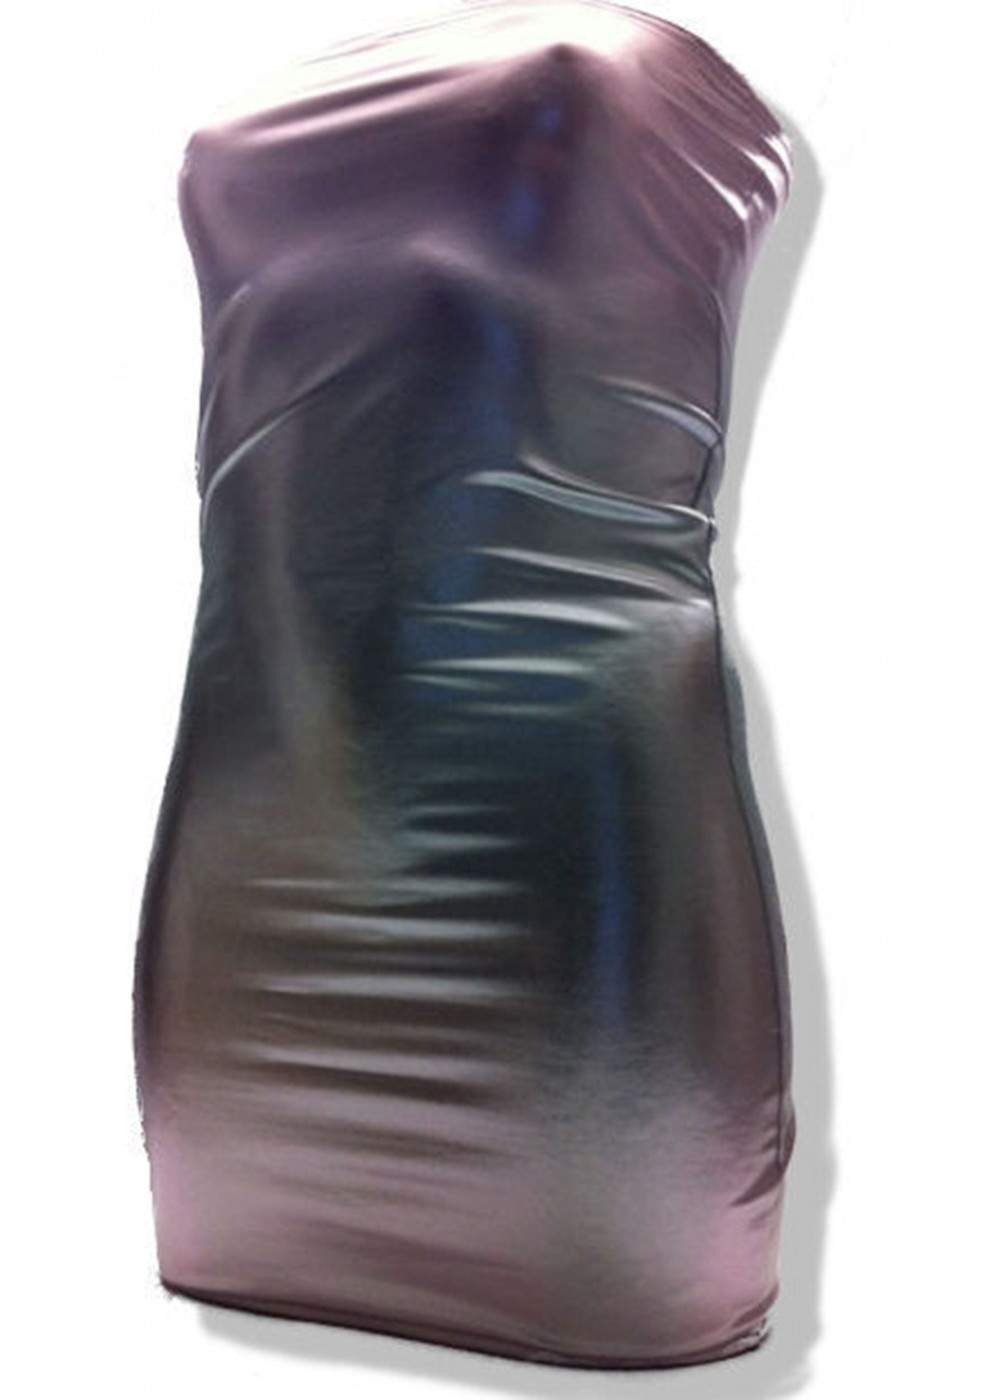 Silver bandeau dress sizes 44 - 52 many lengths - 